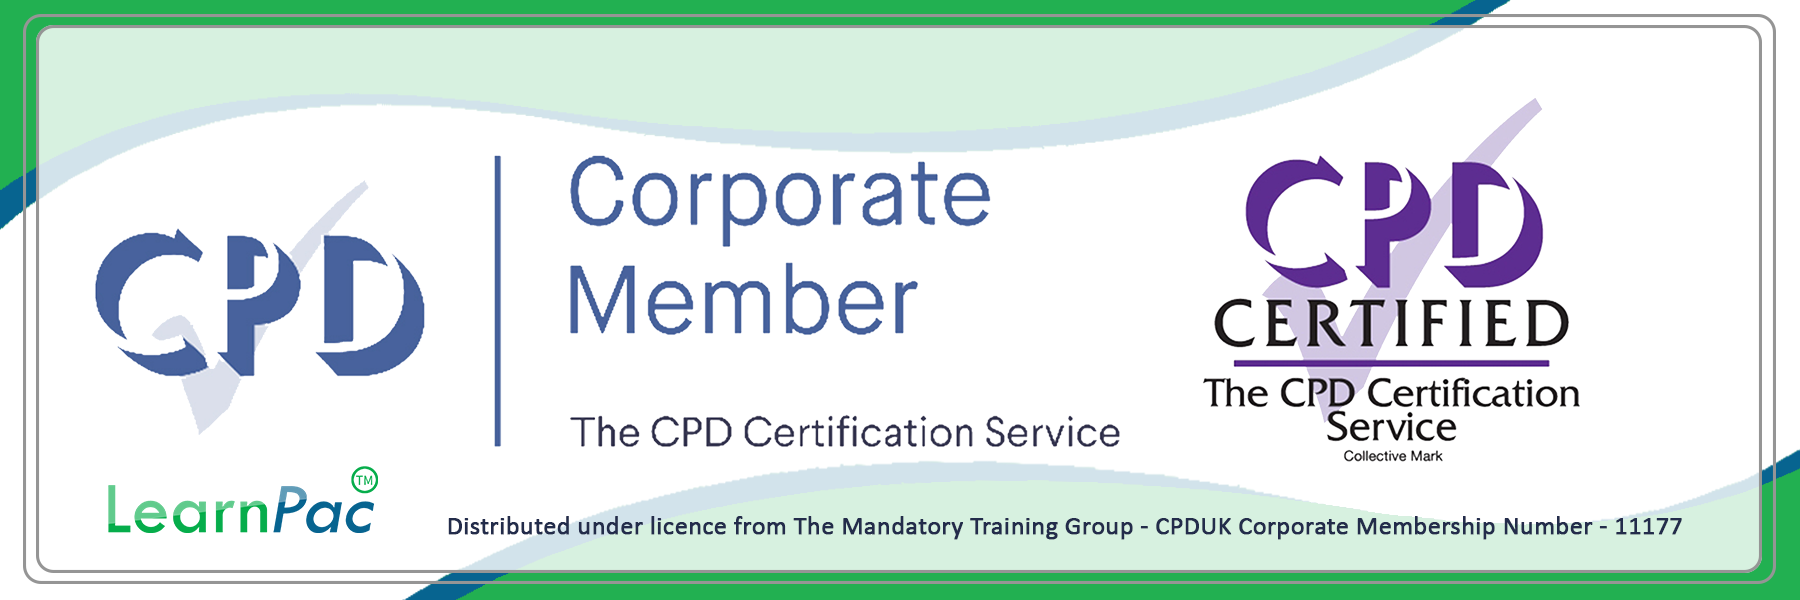 Care Certificate Standard 7 - CPDUK Certified - Learnpac System UK - 